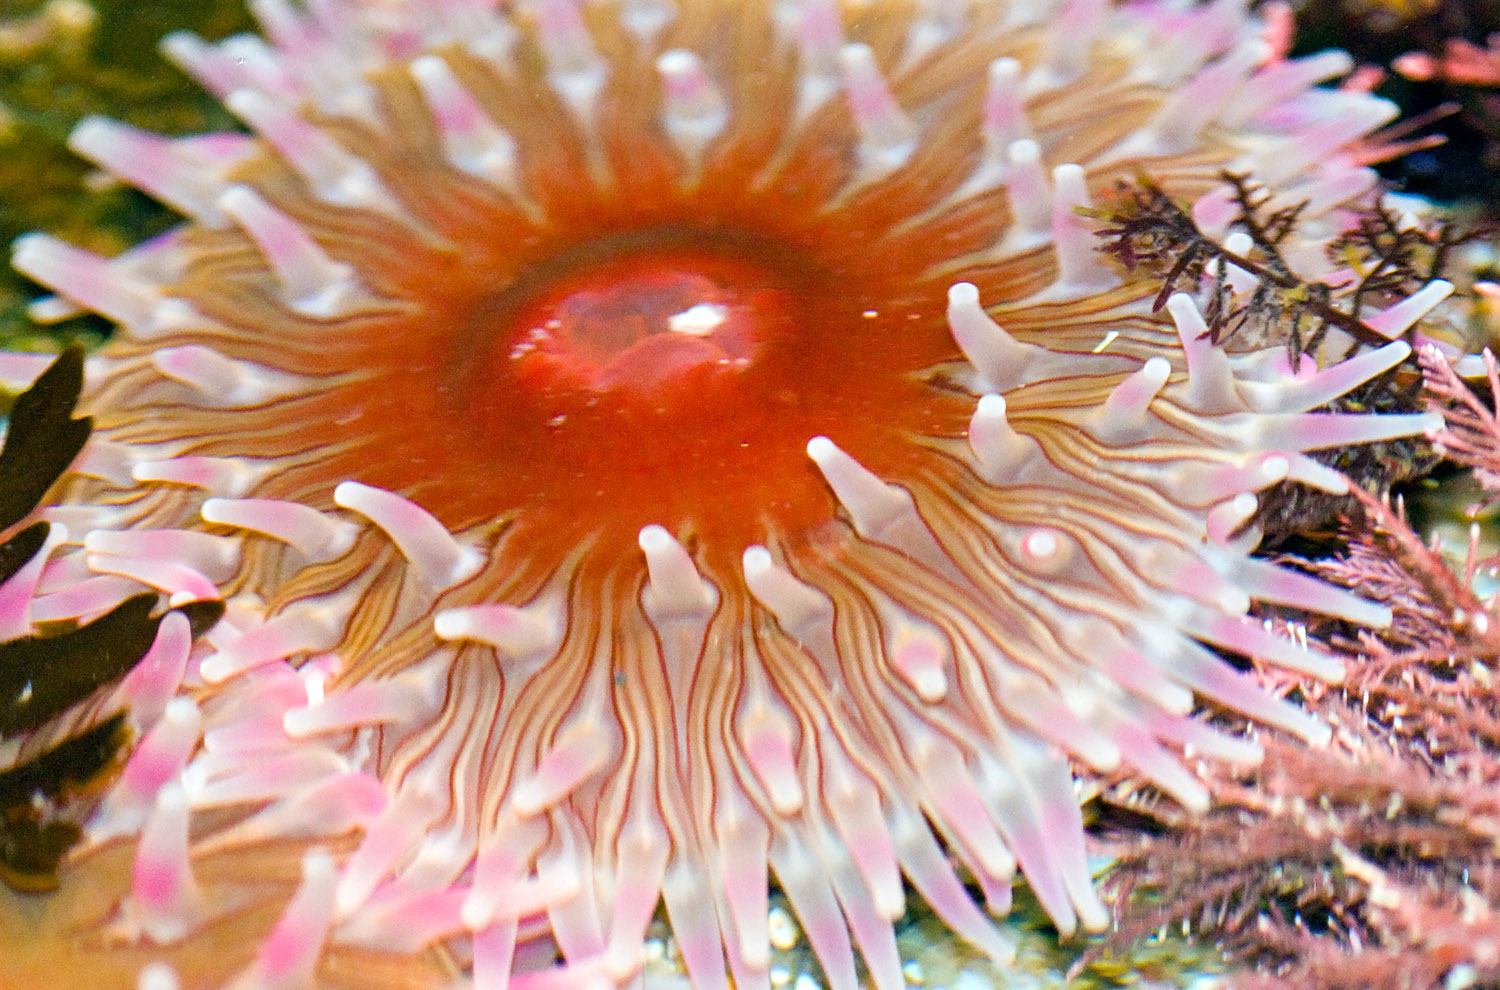 sea-anemone-photo-image-038a.jpg